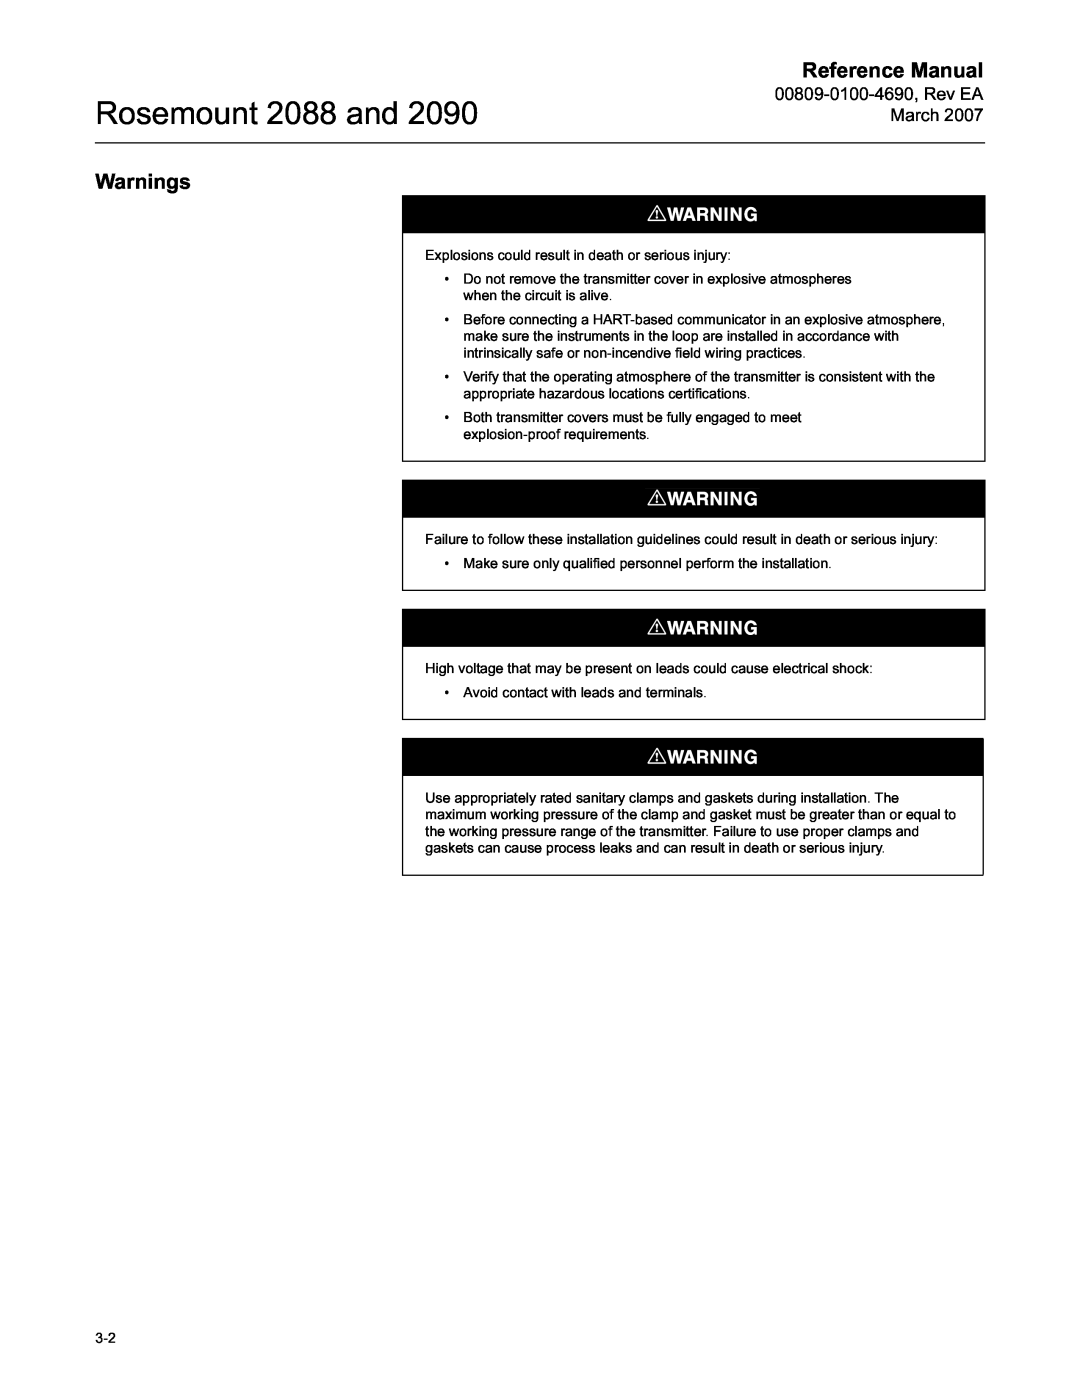 Emerson Process Management 2090 manual Warnings, Rosemount 2088 and, Reference Manual 